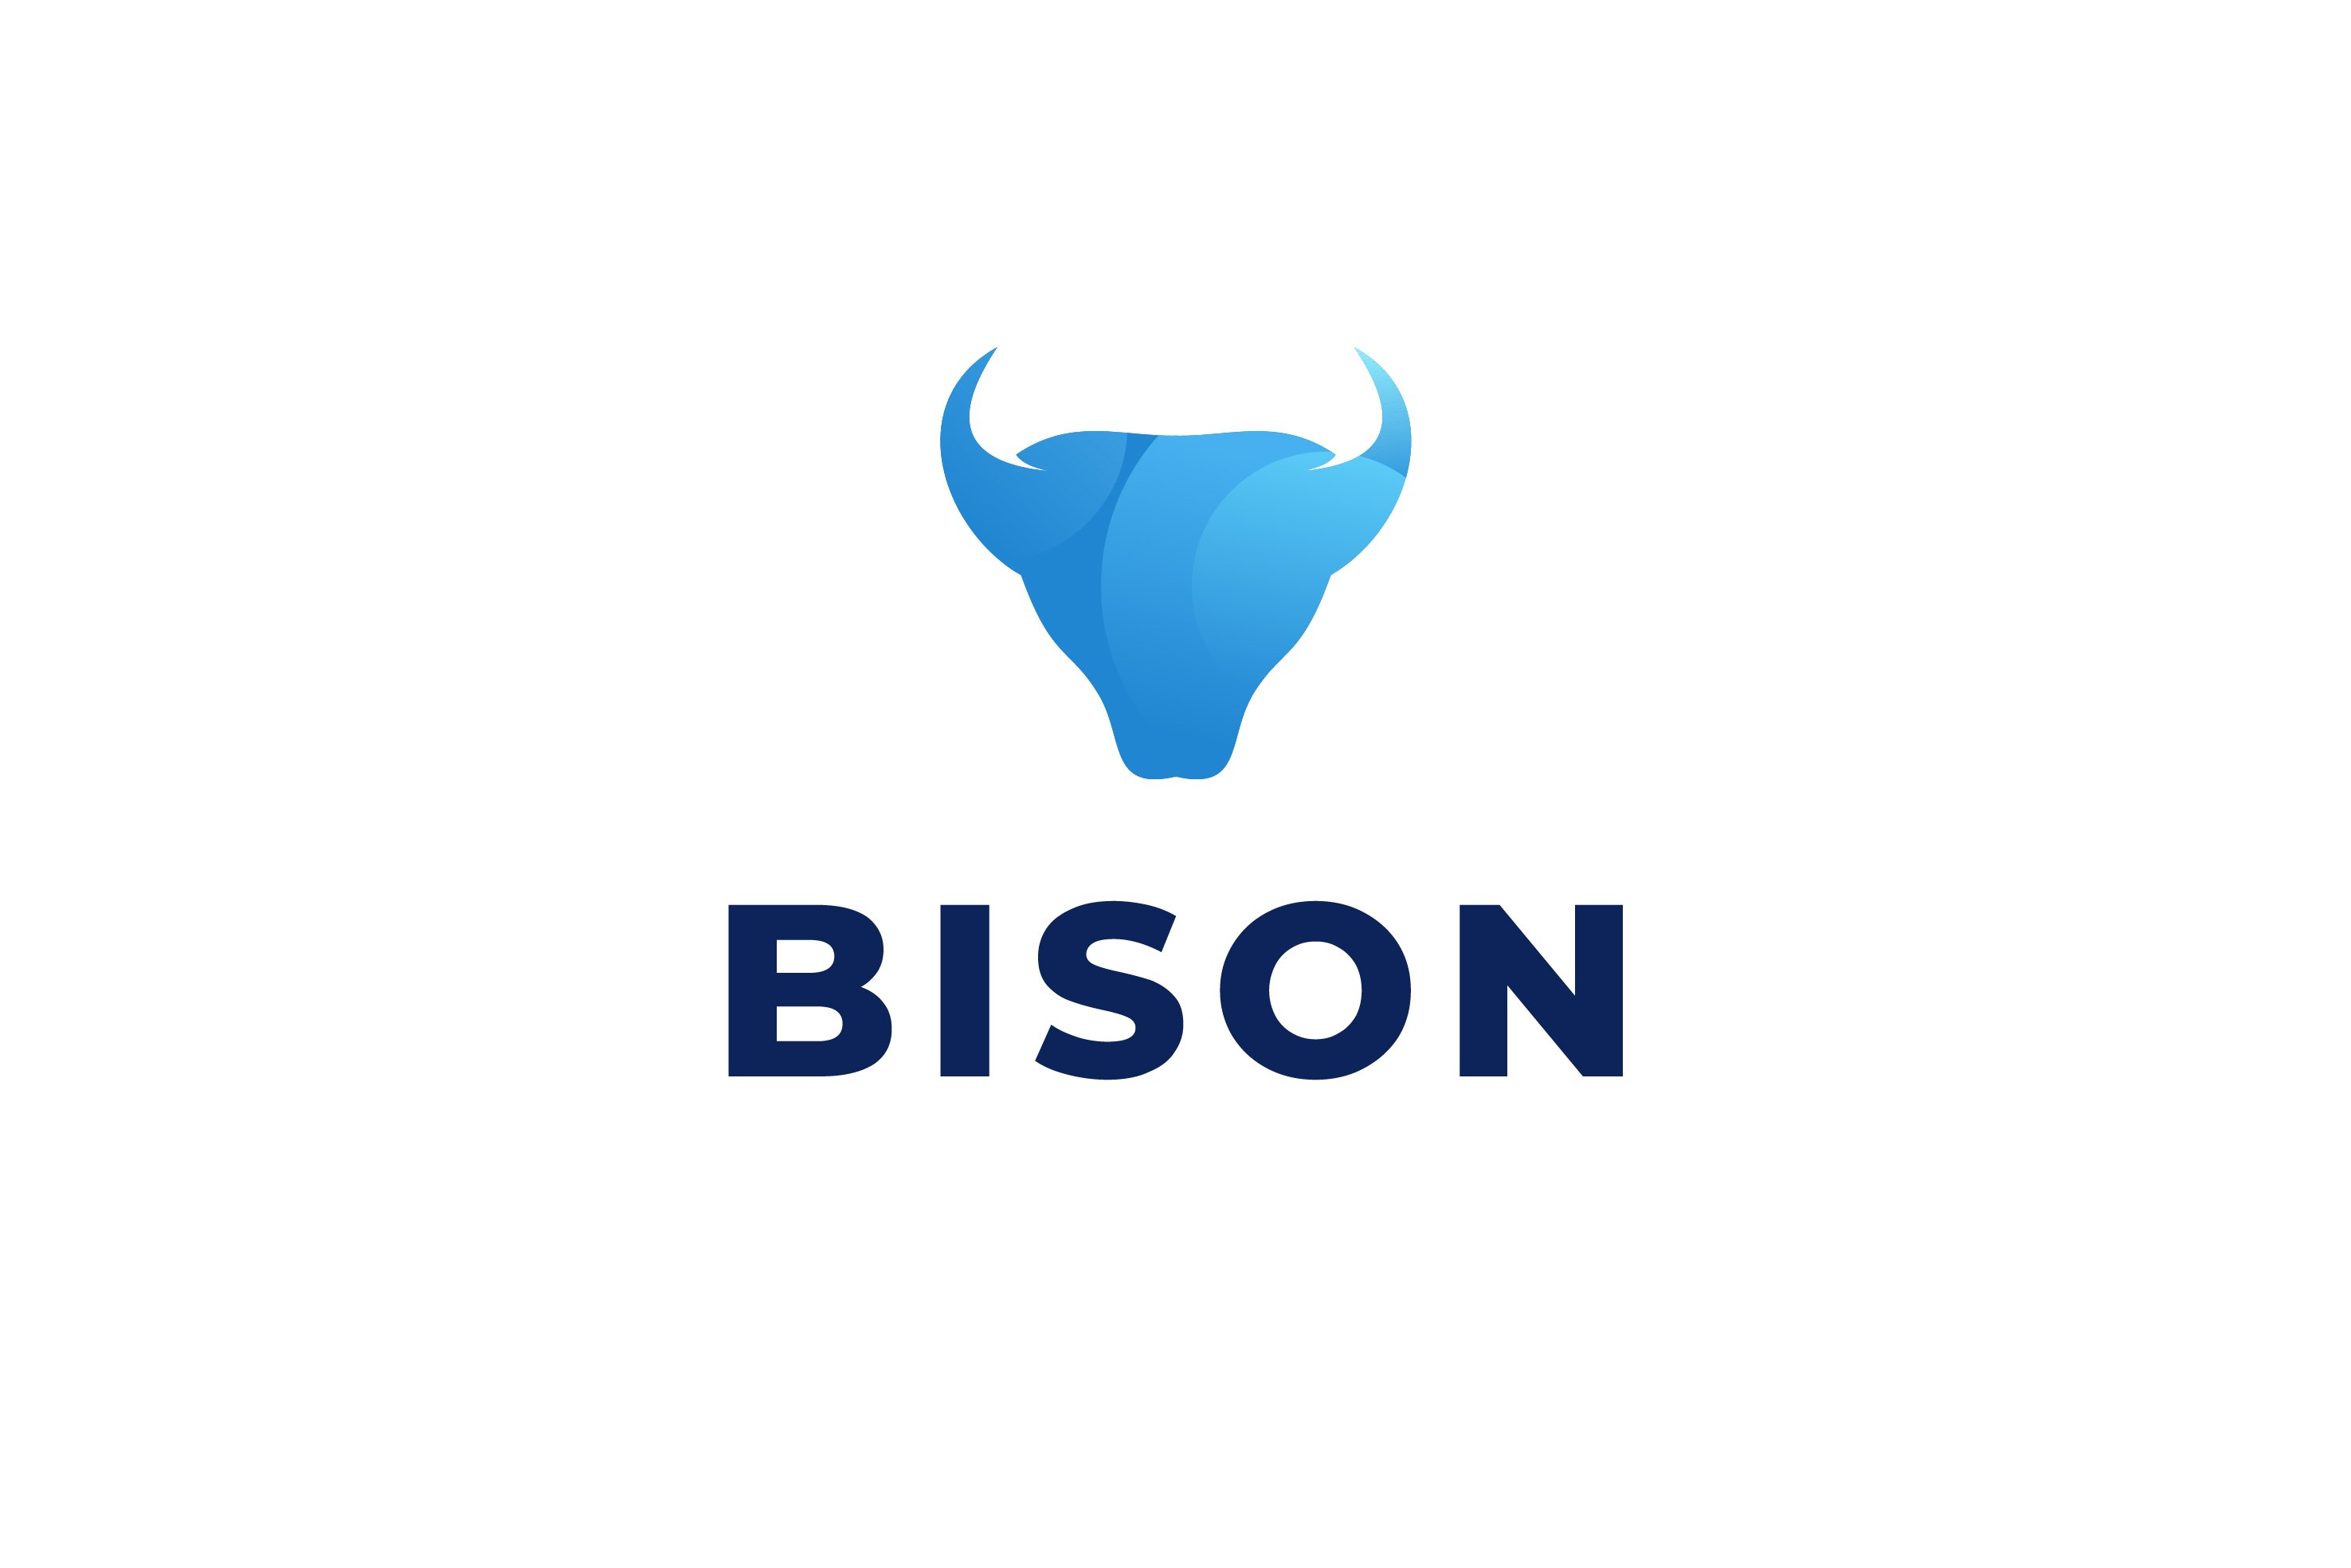 Bull bison head gradient logo cover image.